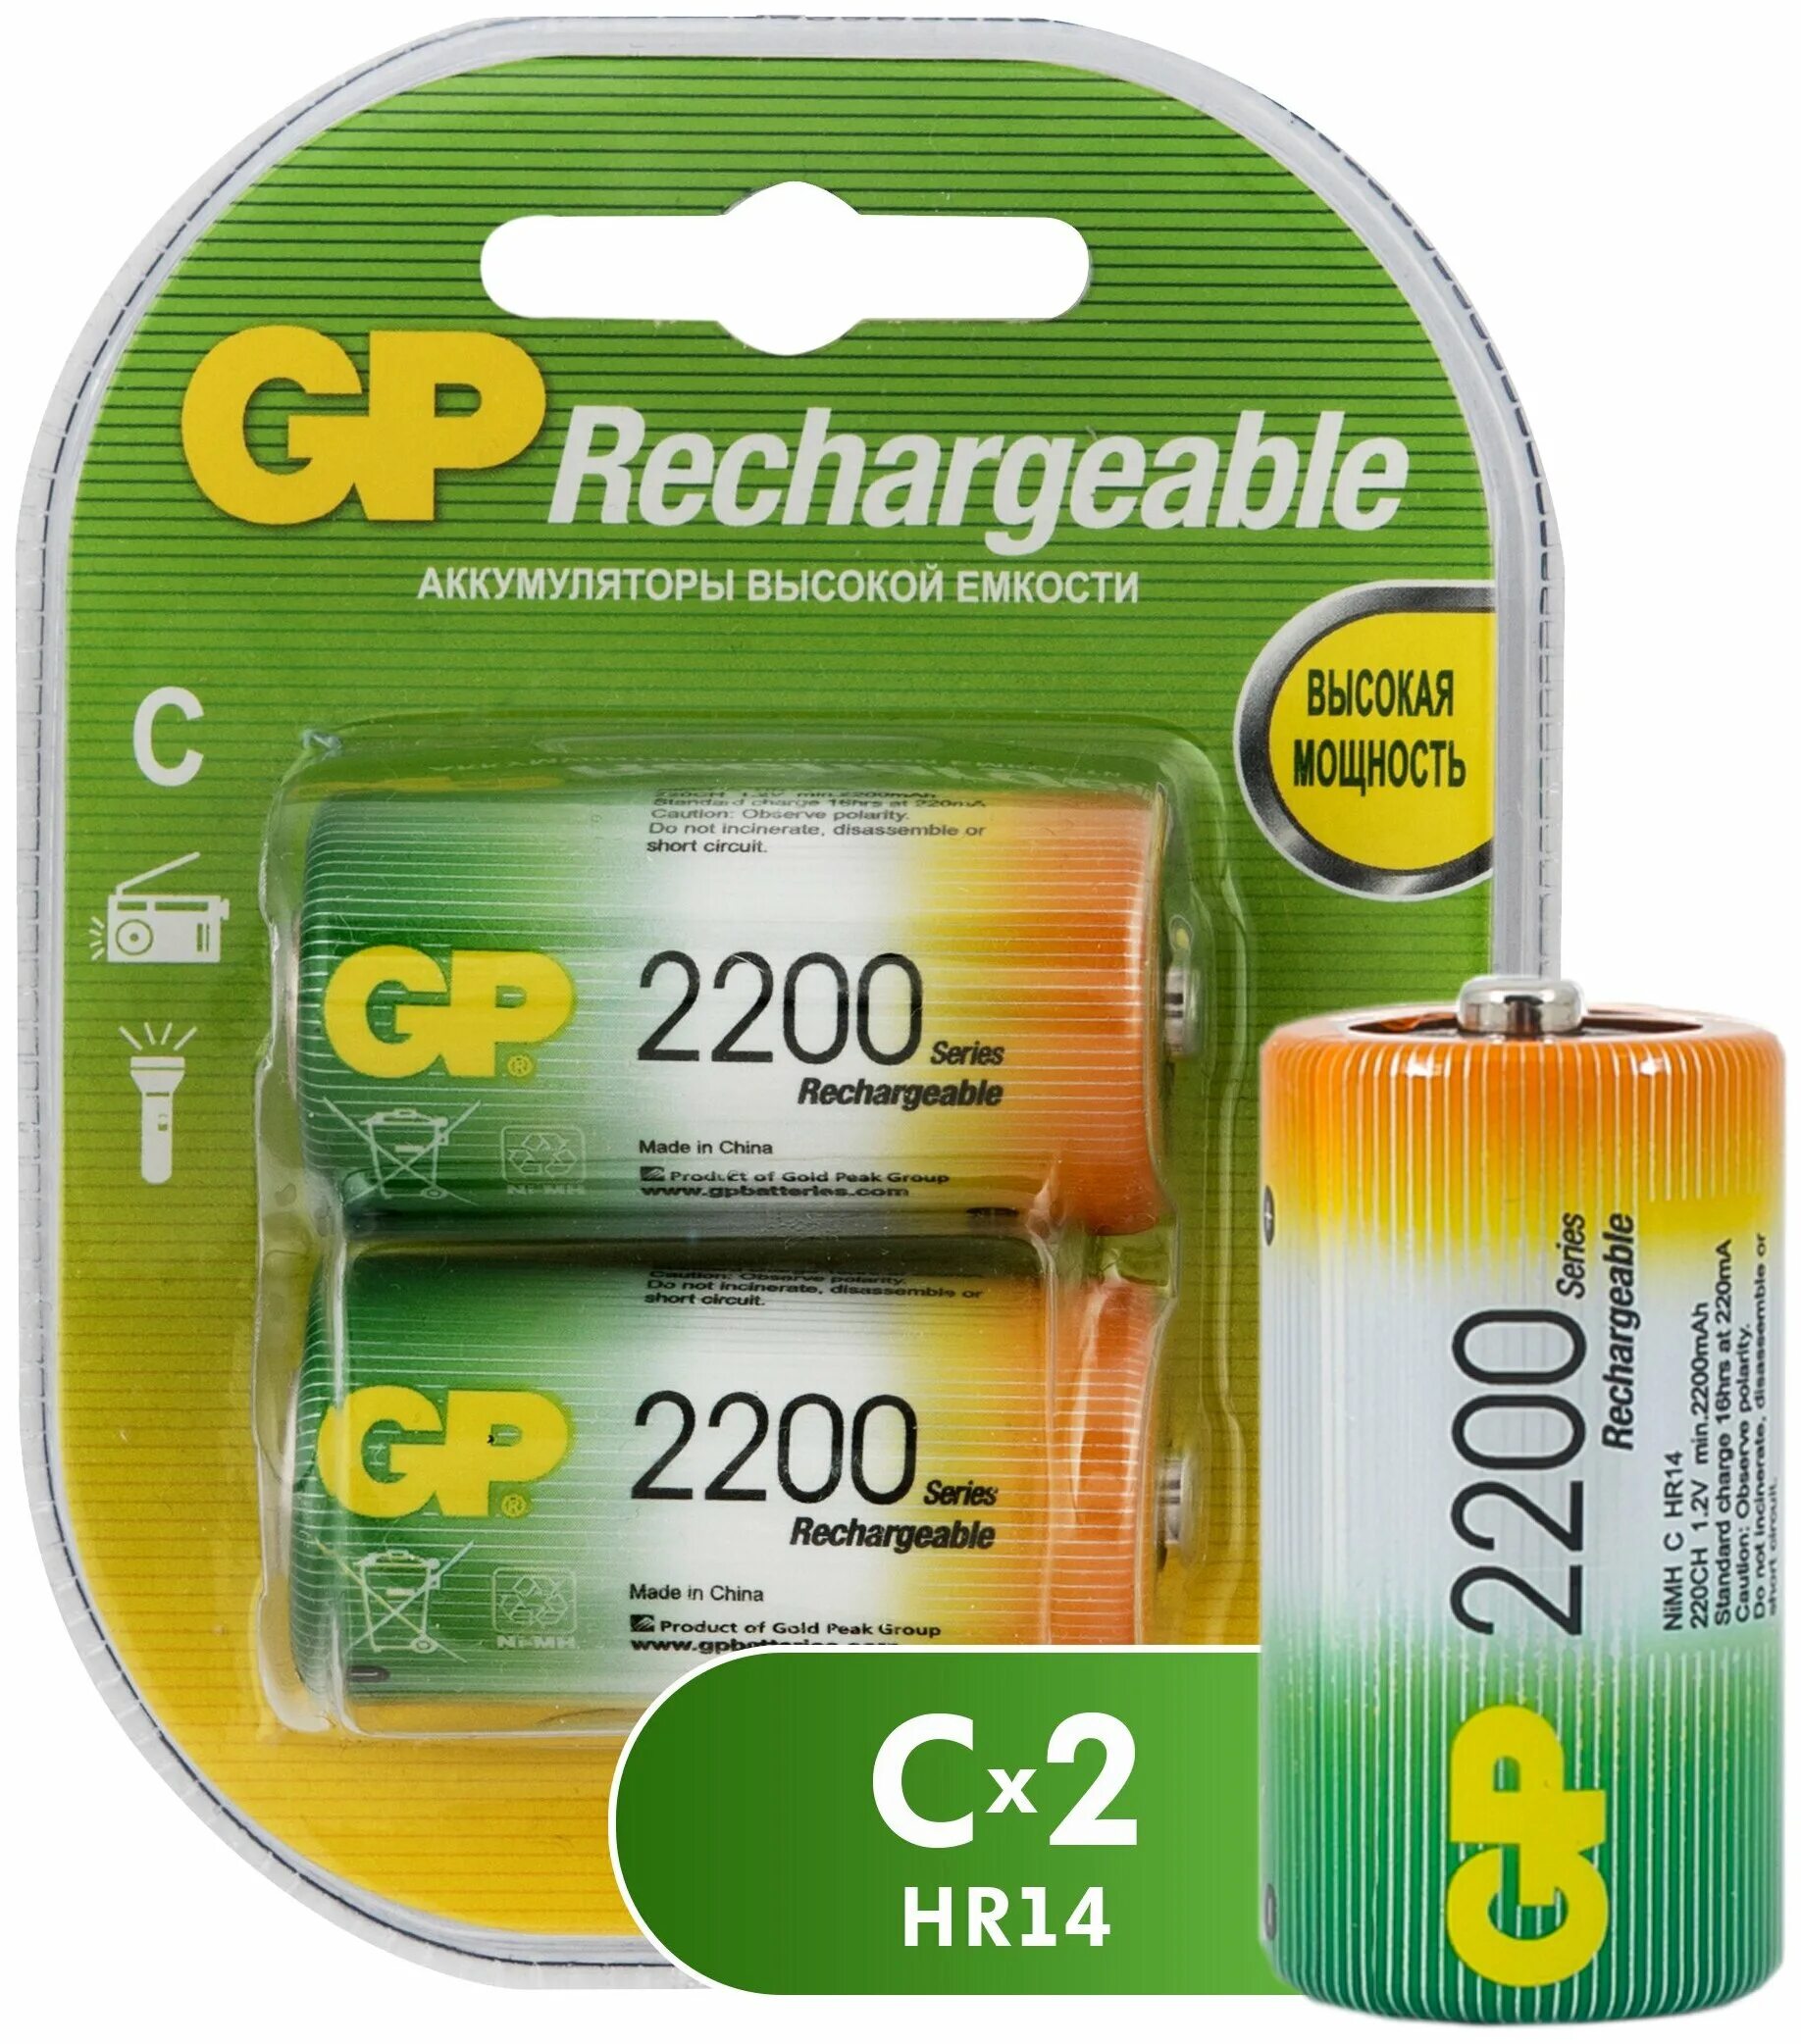 Cr ch. Аккумулятор GP 220chc. GP 2200 Rechargeable. GP 220dh-2cr2 12/72. GP 220ch-2cr2 12/120.